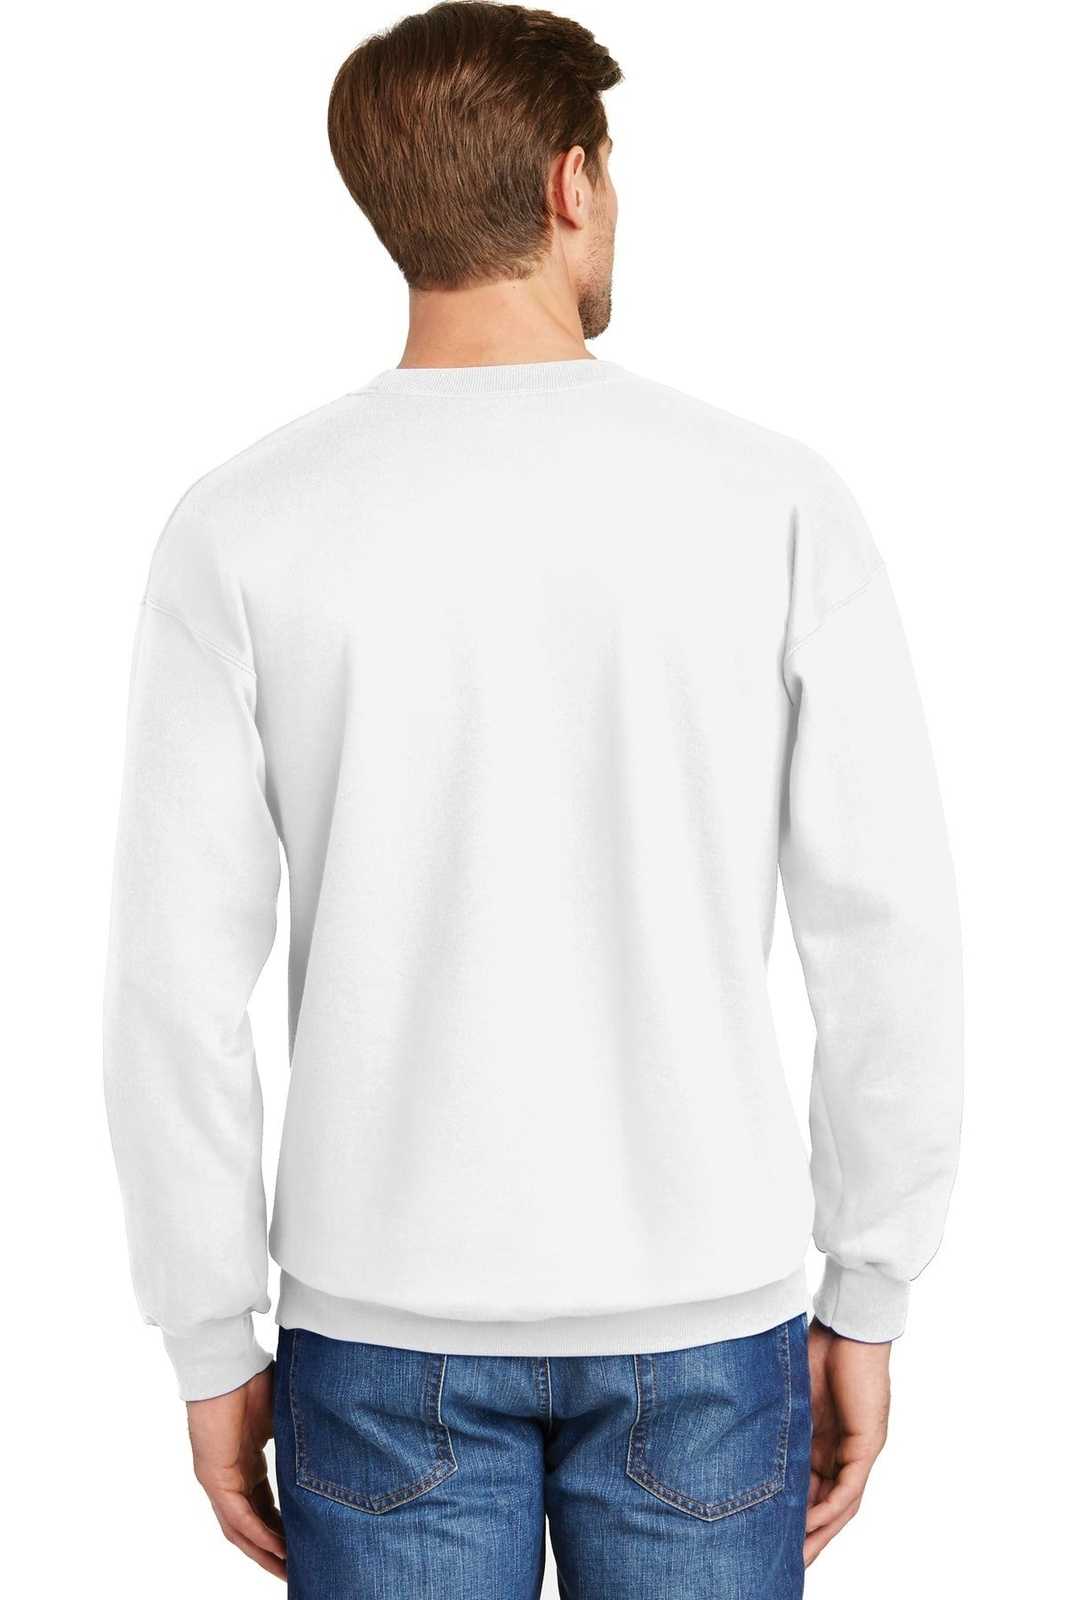 Hanes F260 Ultimate Cotton Crewneck Sweatshirt - White - HIT a Double